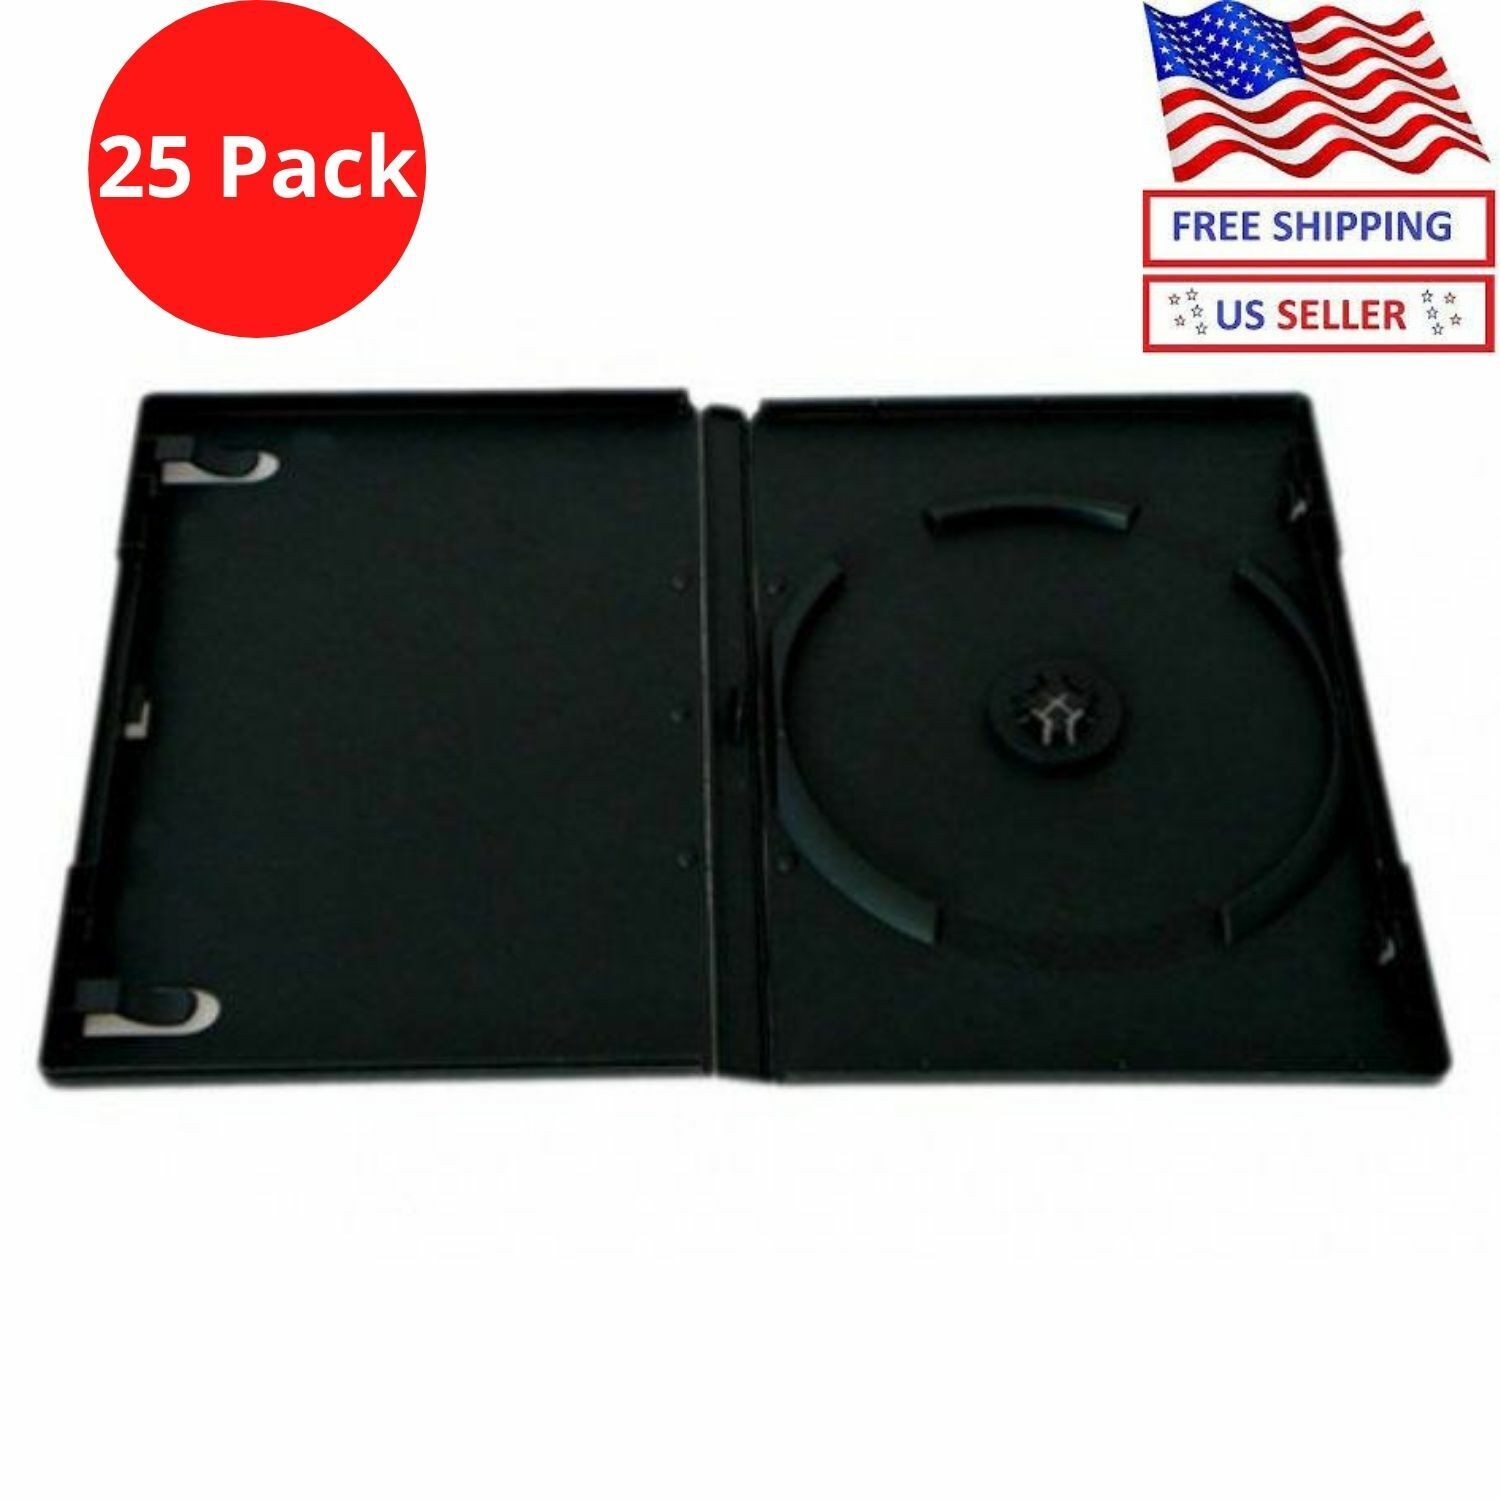 25 Pack Black Slim Single Disc CD Blue Ray DVD Movie Case Storage Box New